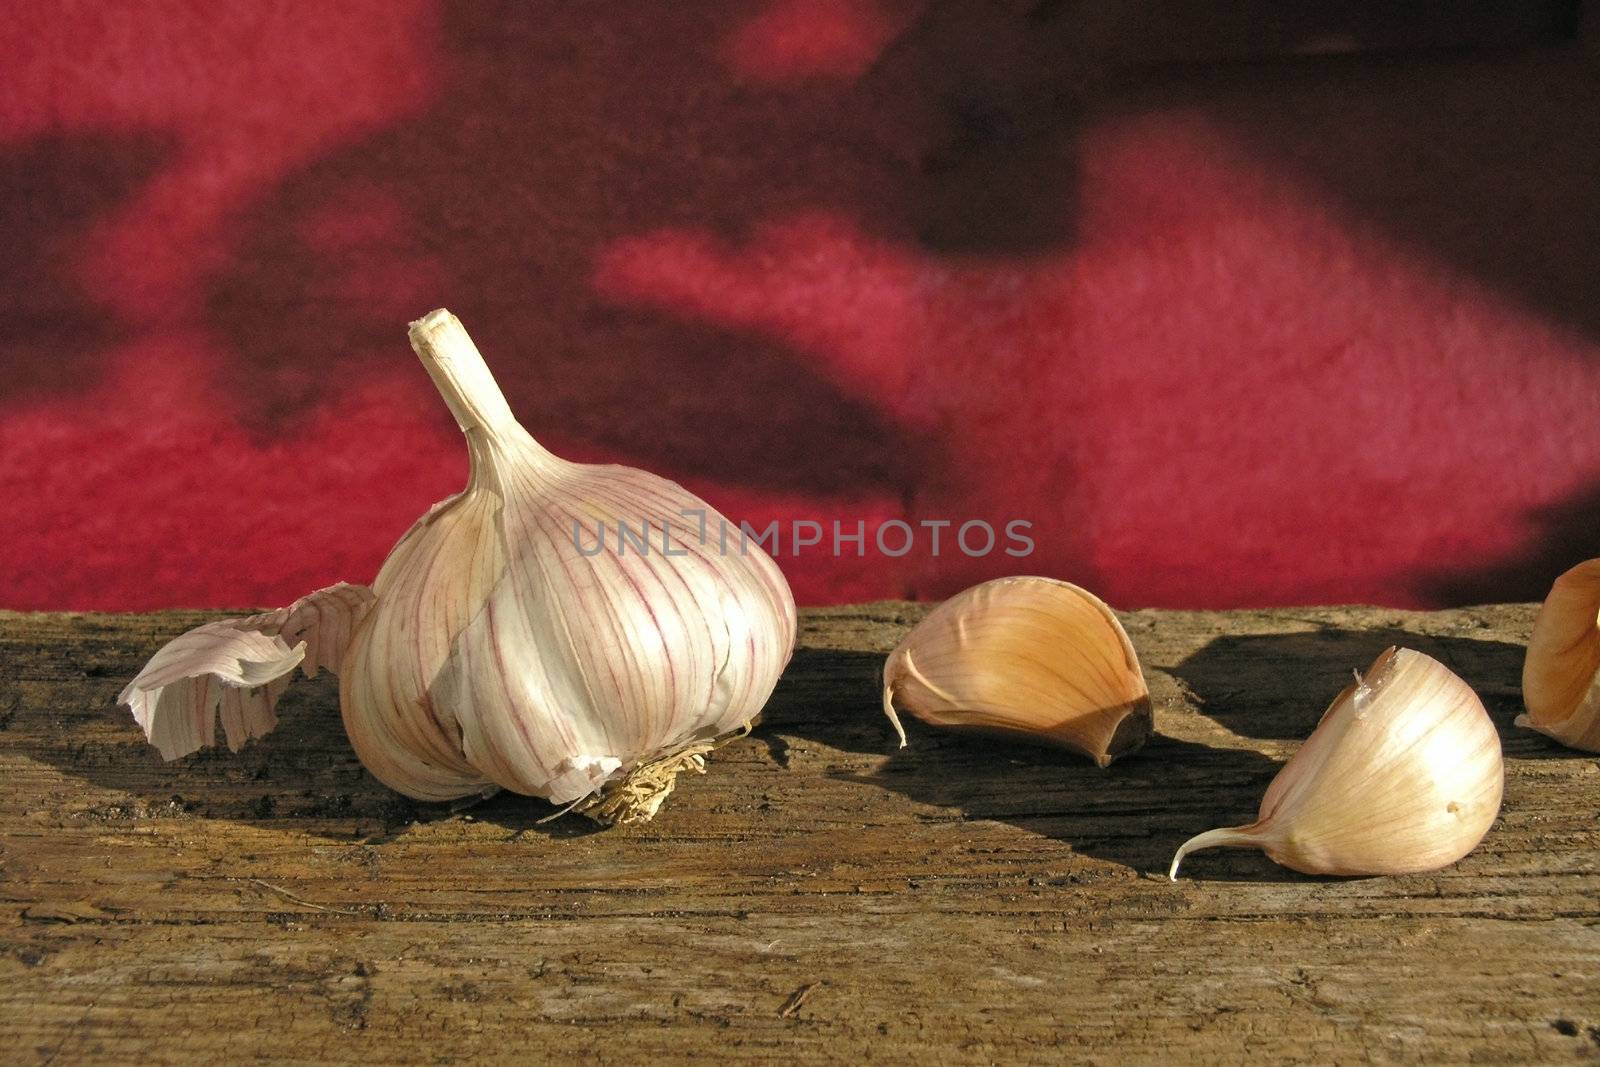 garlic on wood table (dark red background)